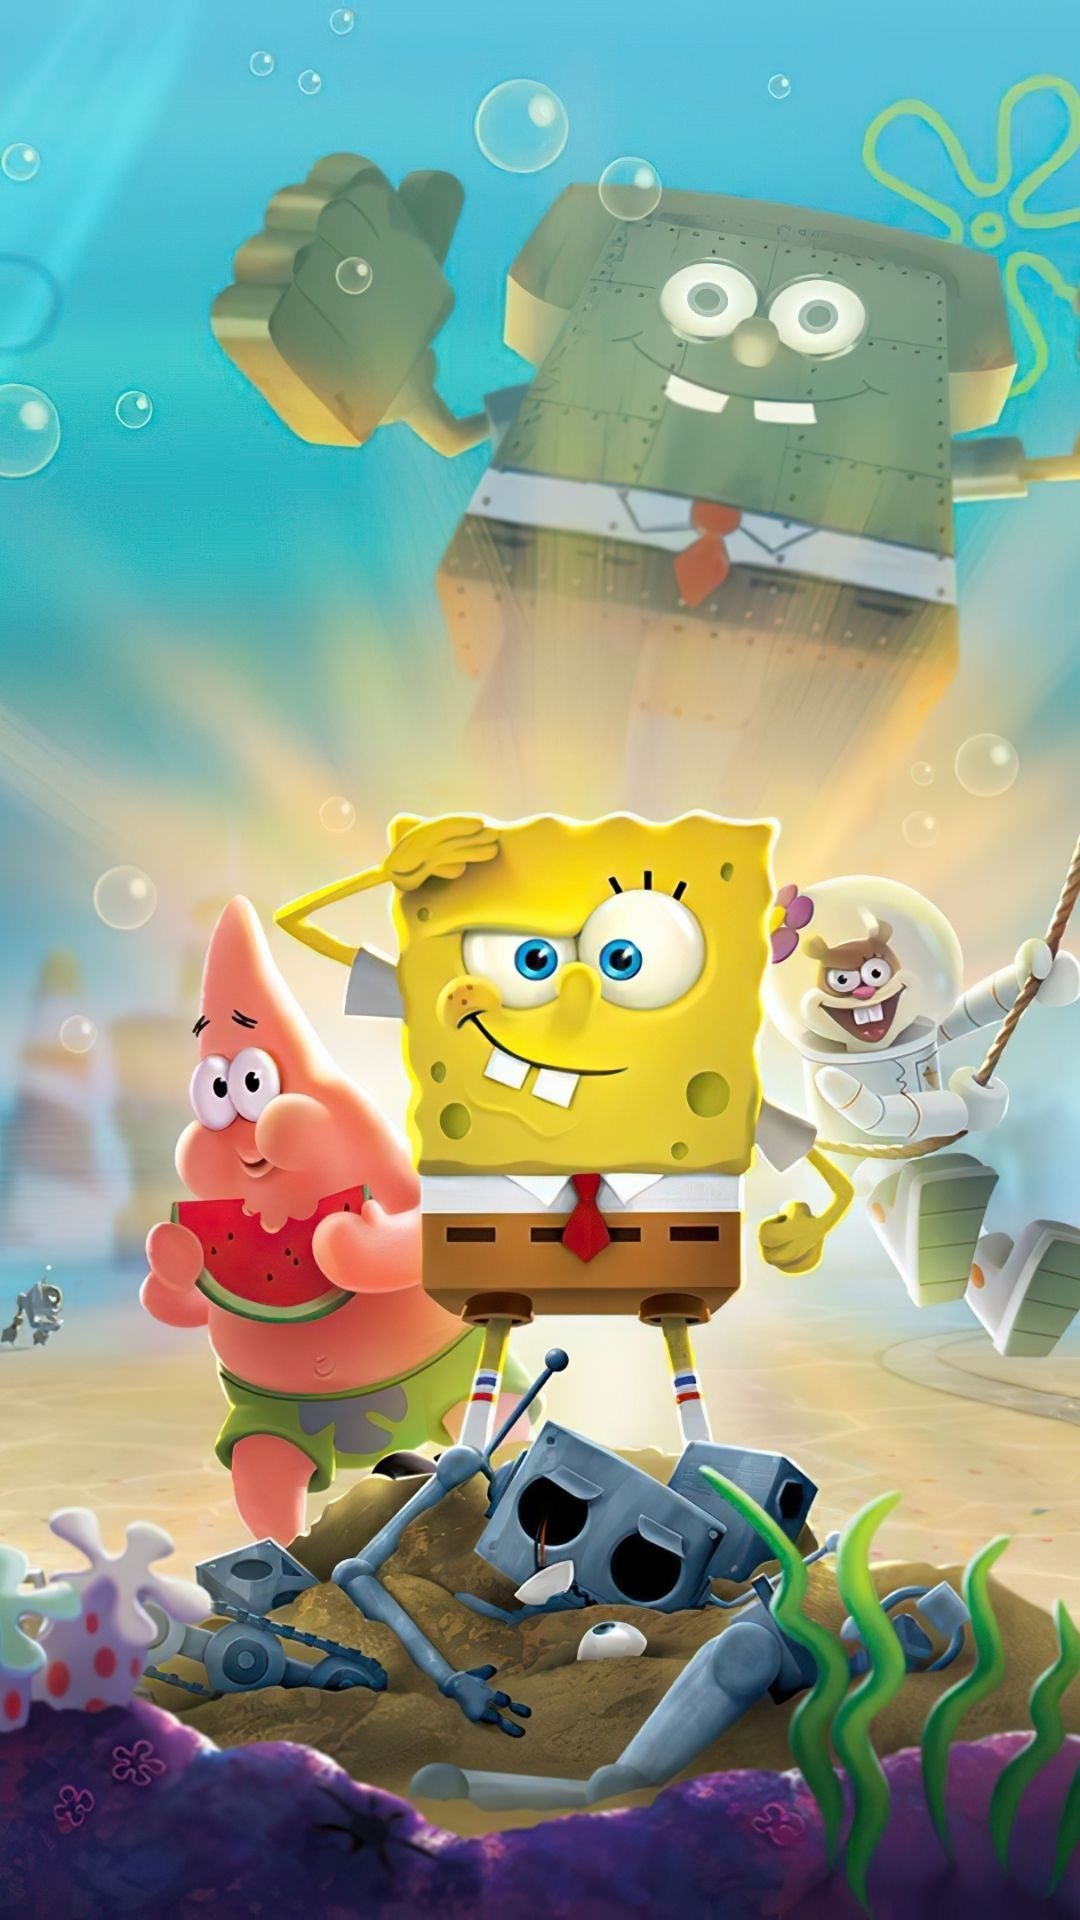 SpongeBob SquarePants wallpapers, Best of the best, 1080x1920 Full HD Phone